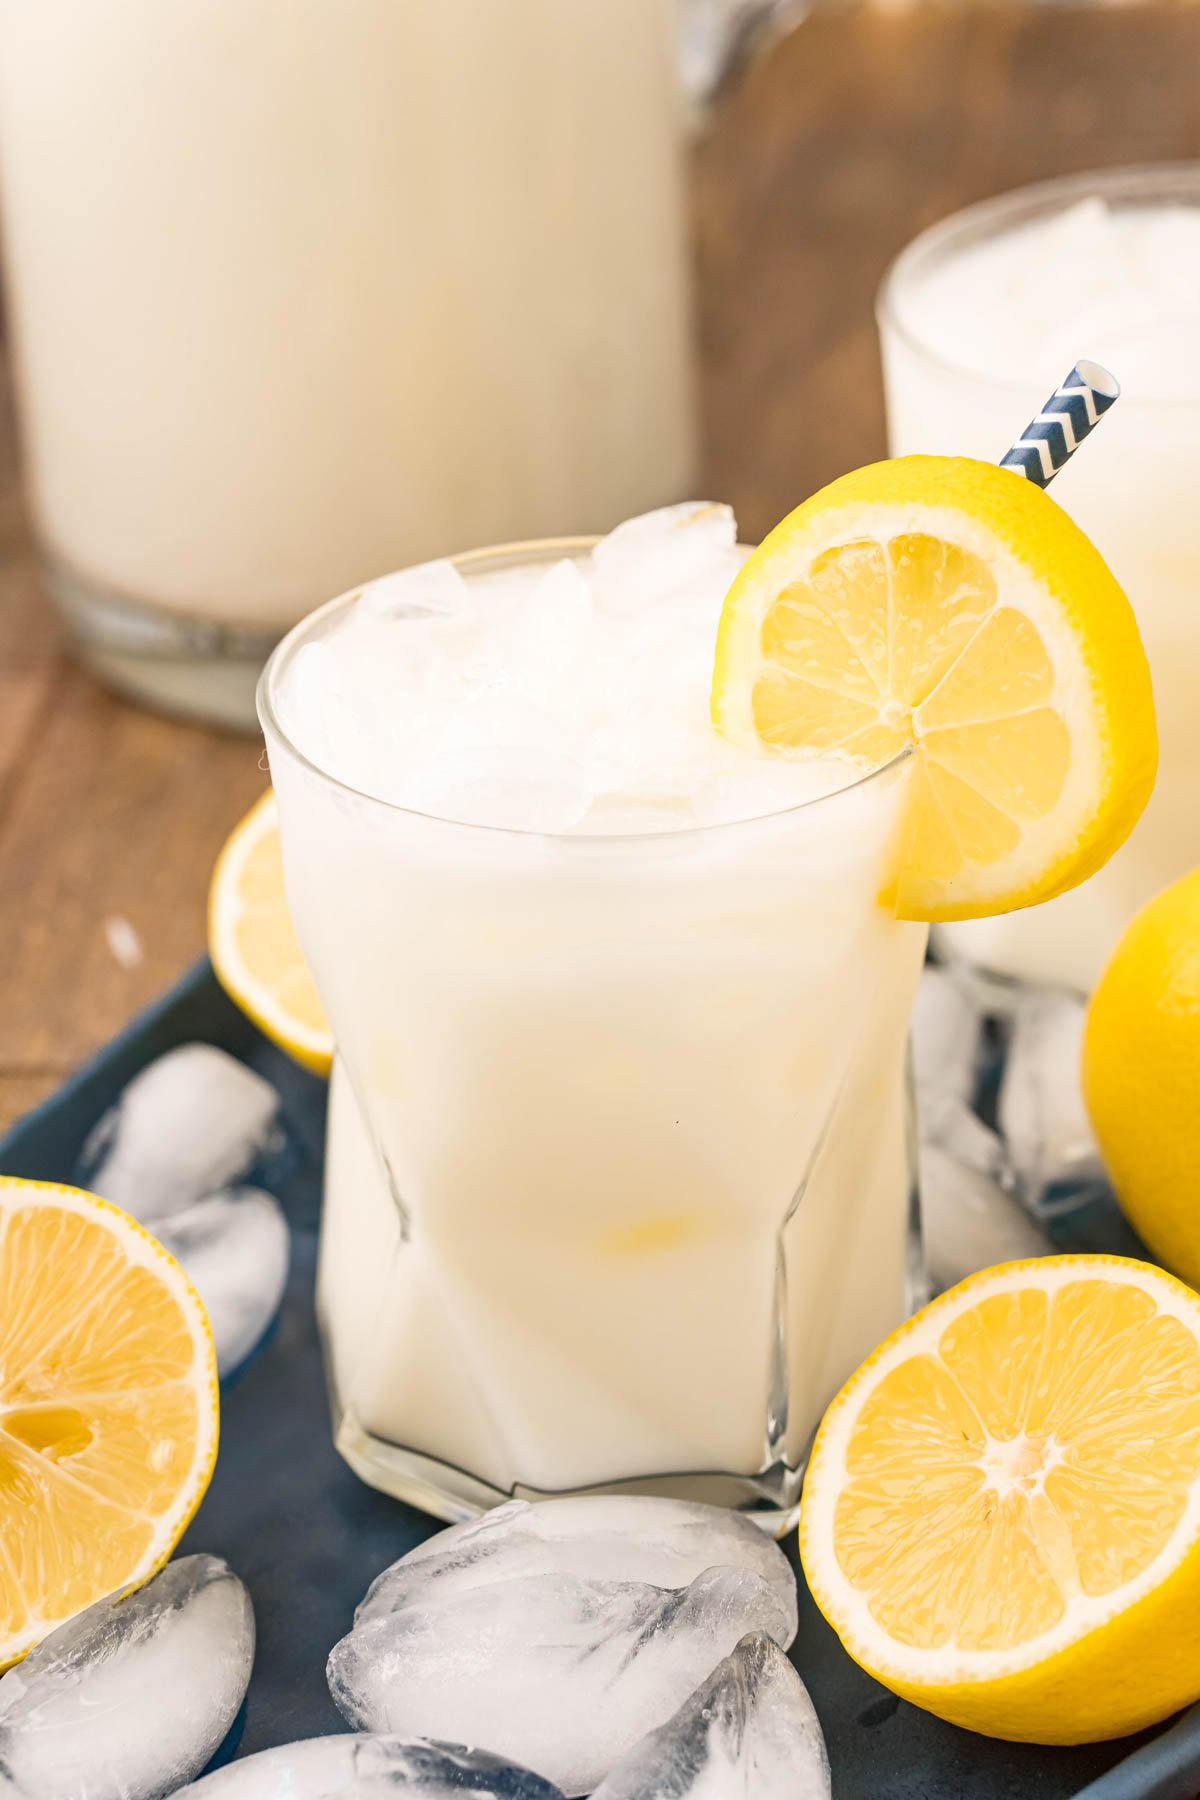 Glass of creamy lemonade with a lemon slice garnish